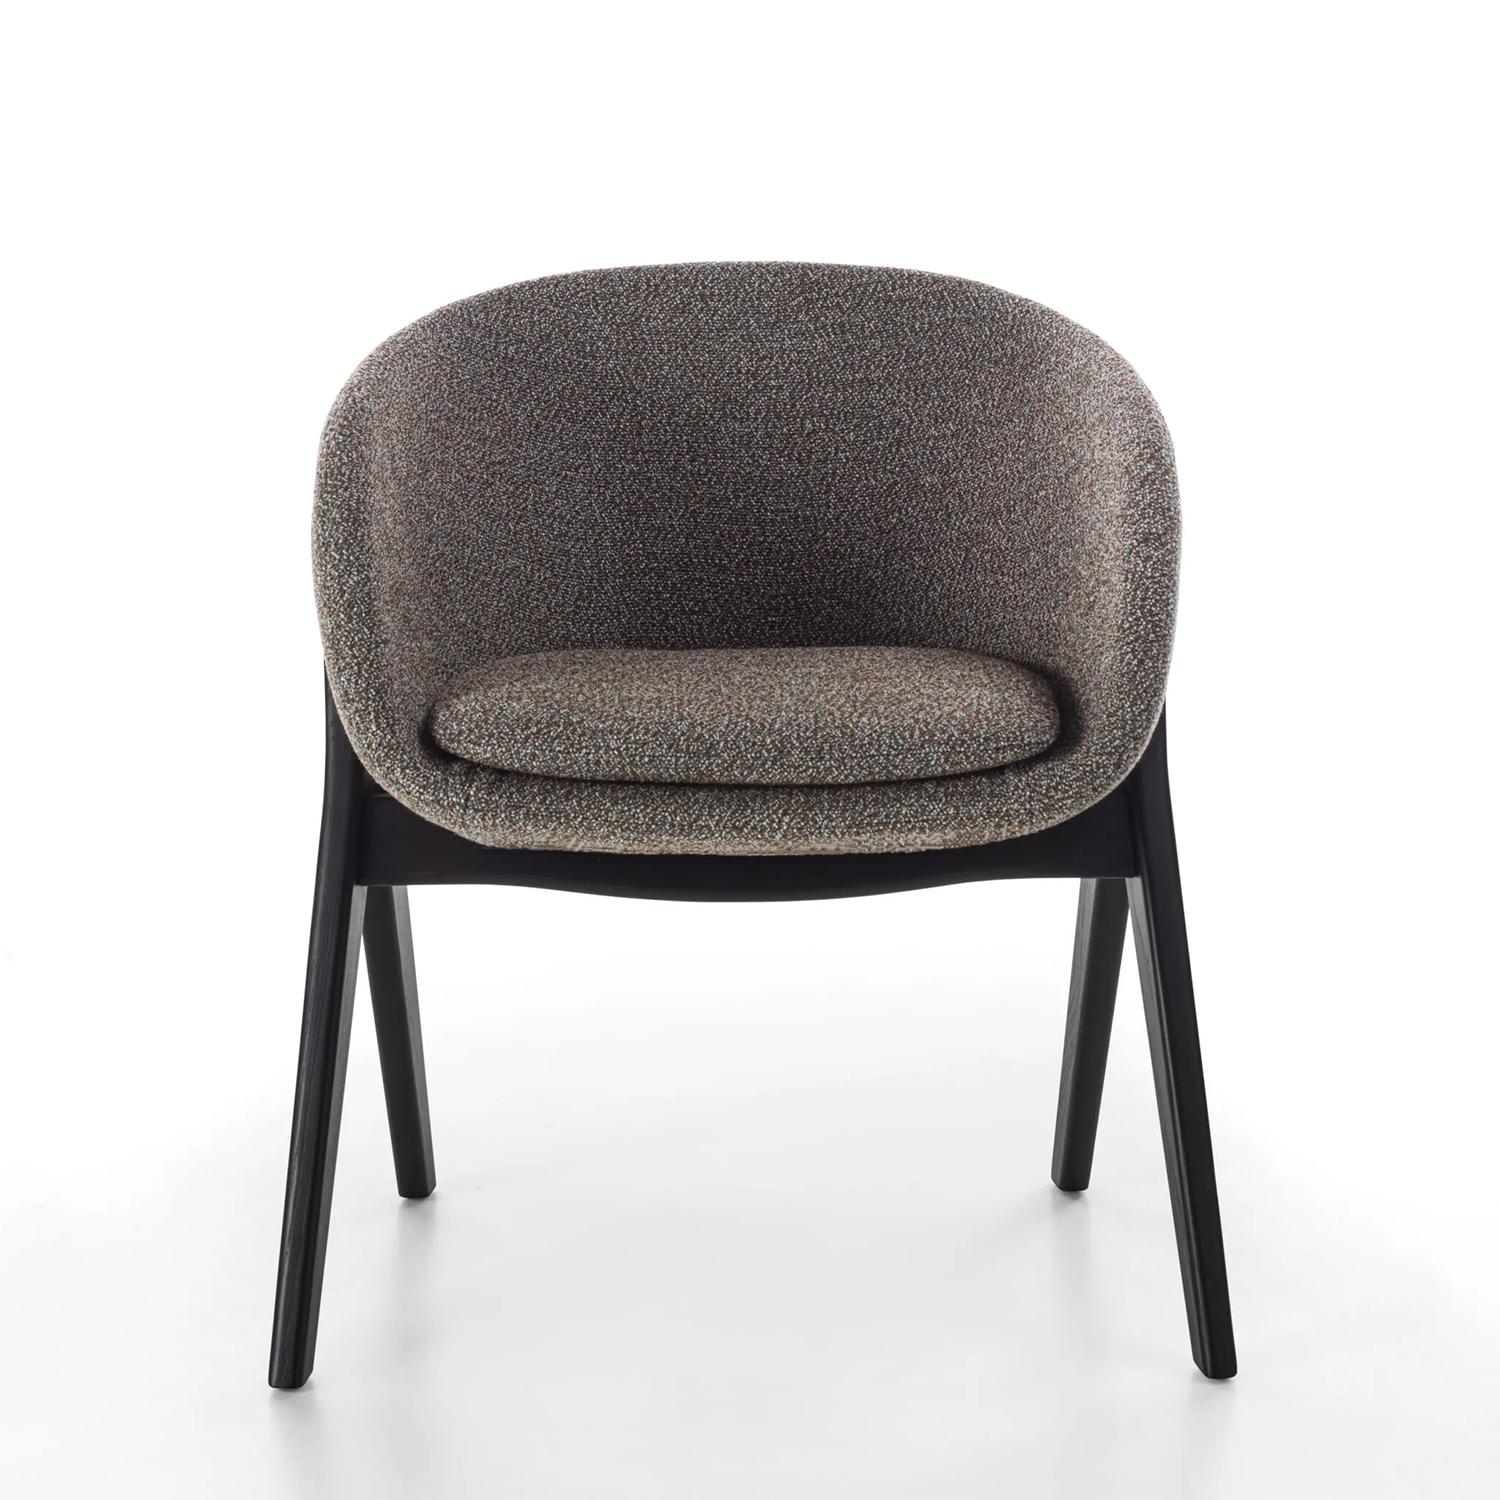 Italian Oprah Ash Dark Chair For Sale